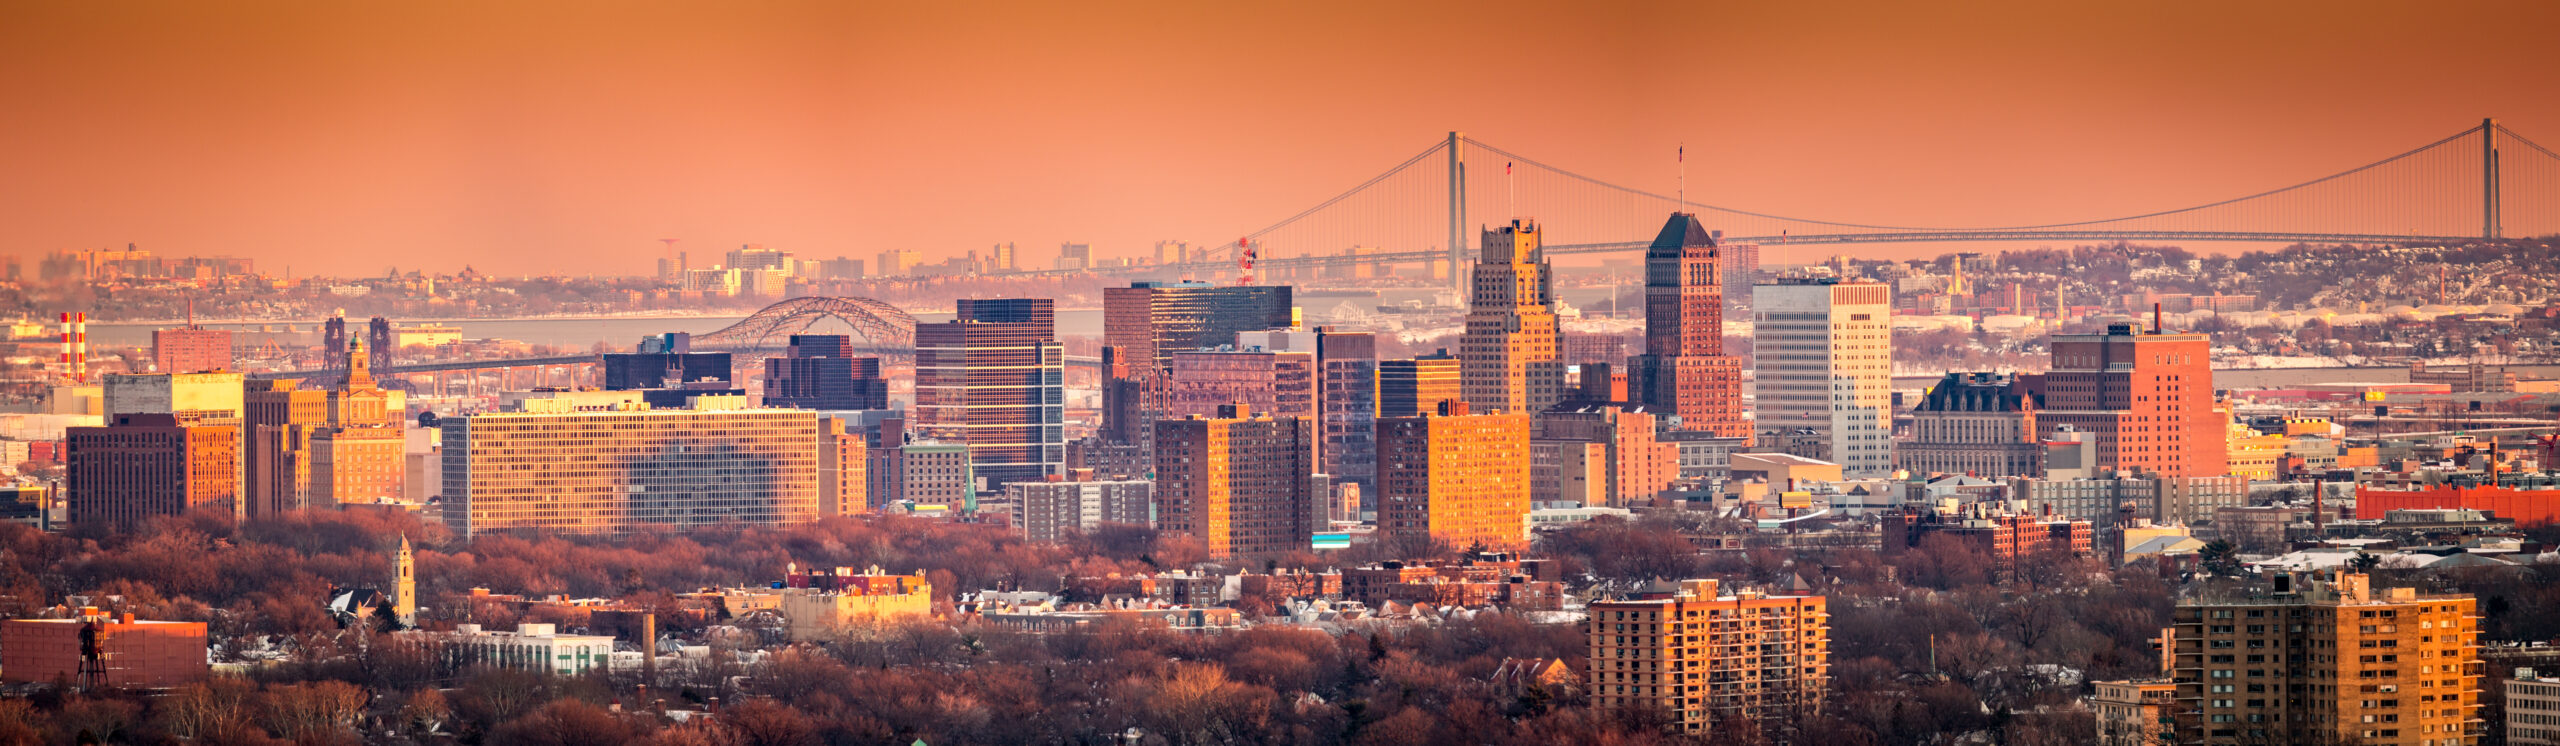 Newark city skyline at sunset